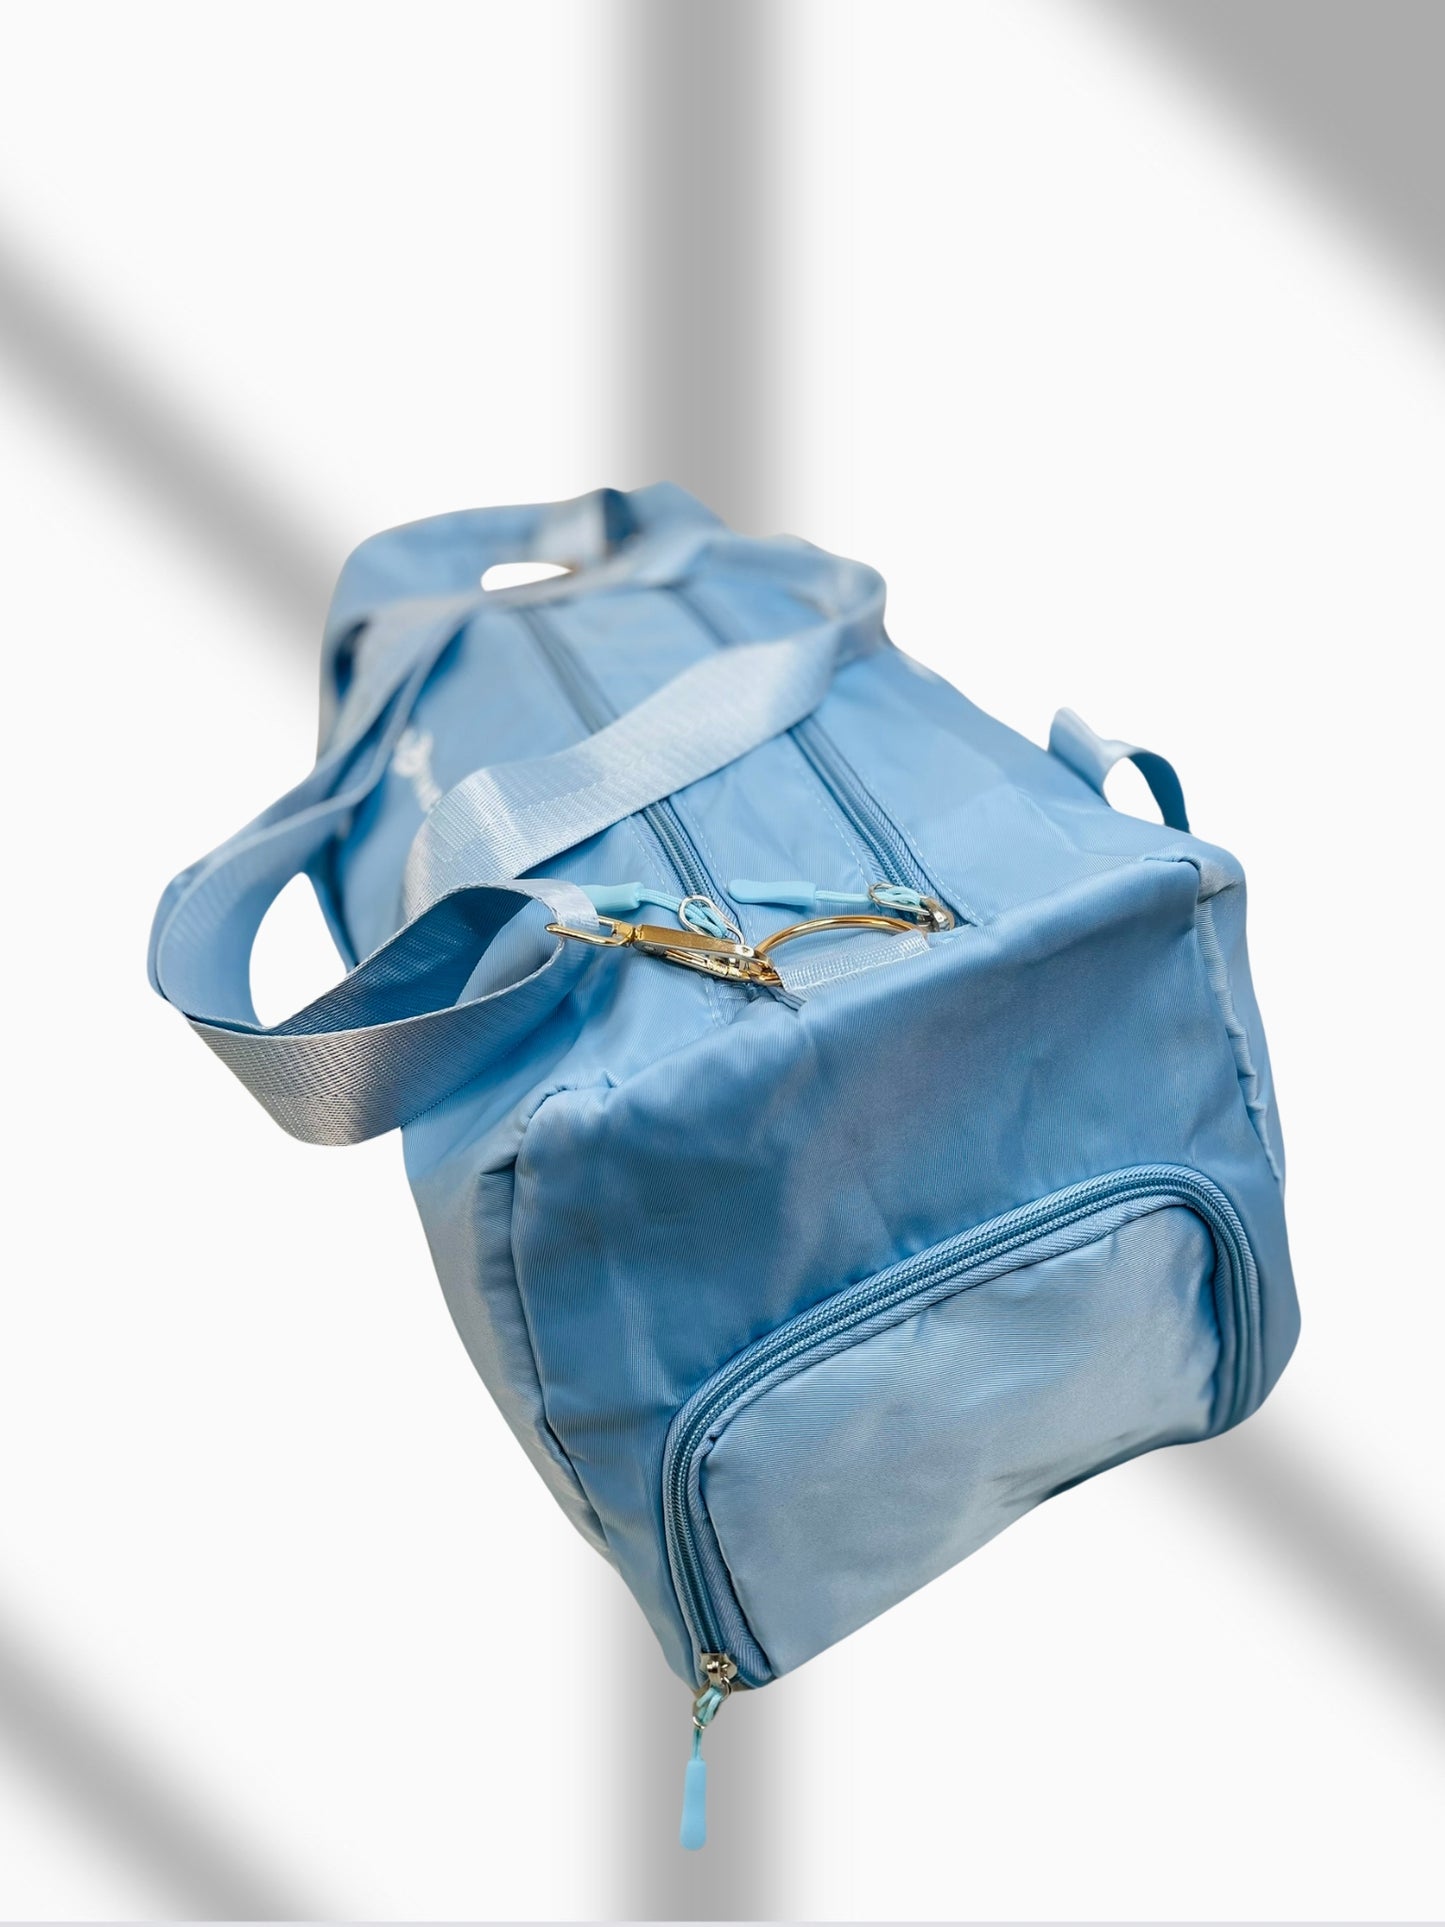 Multifunctional Blue Gym Bag